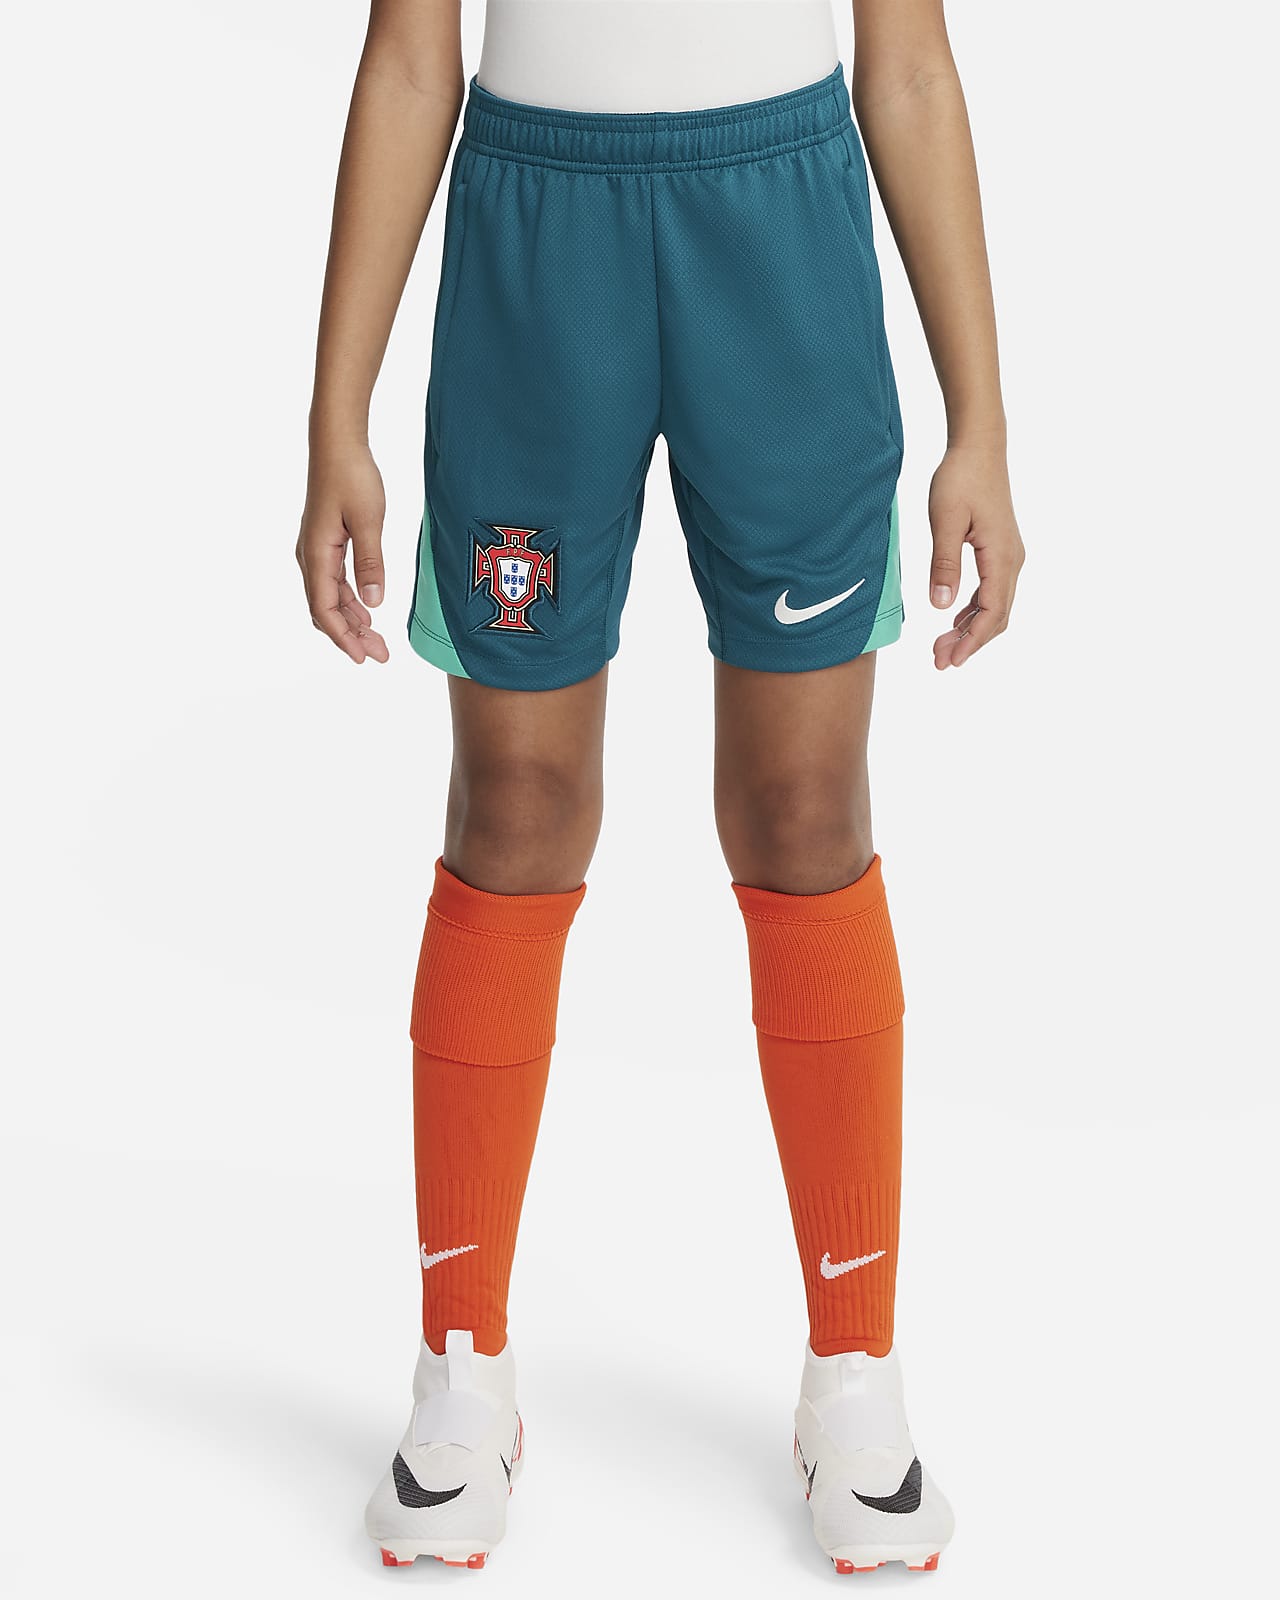 Portugal Strike Pantalons curts de futbol de teixit Knit Nike Dri-FIT - Nen/a